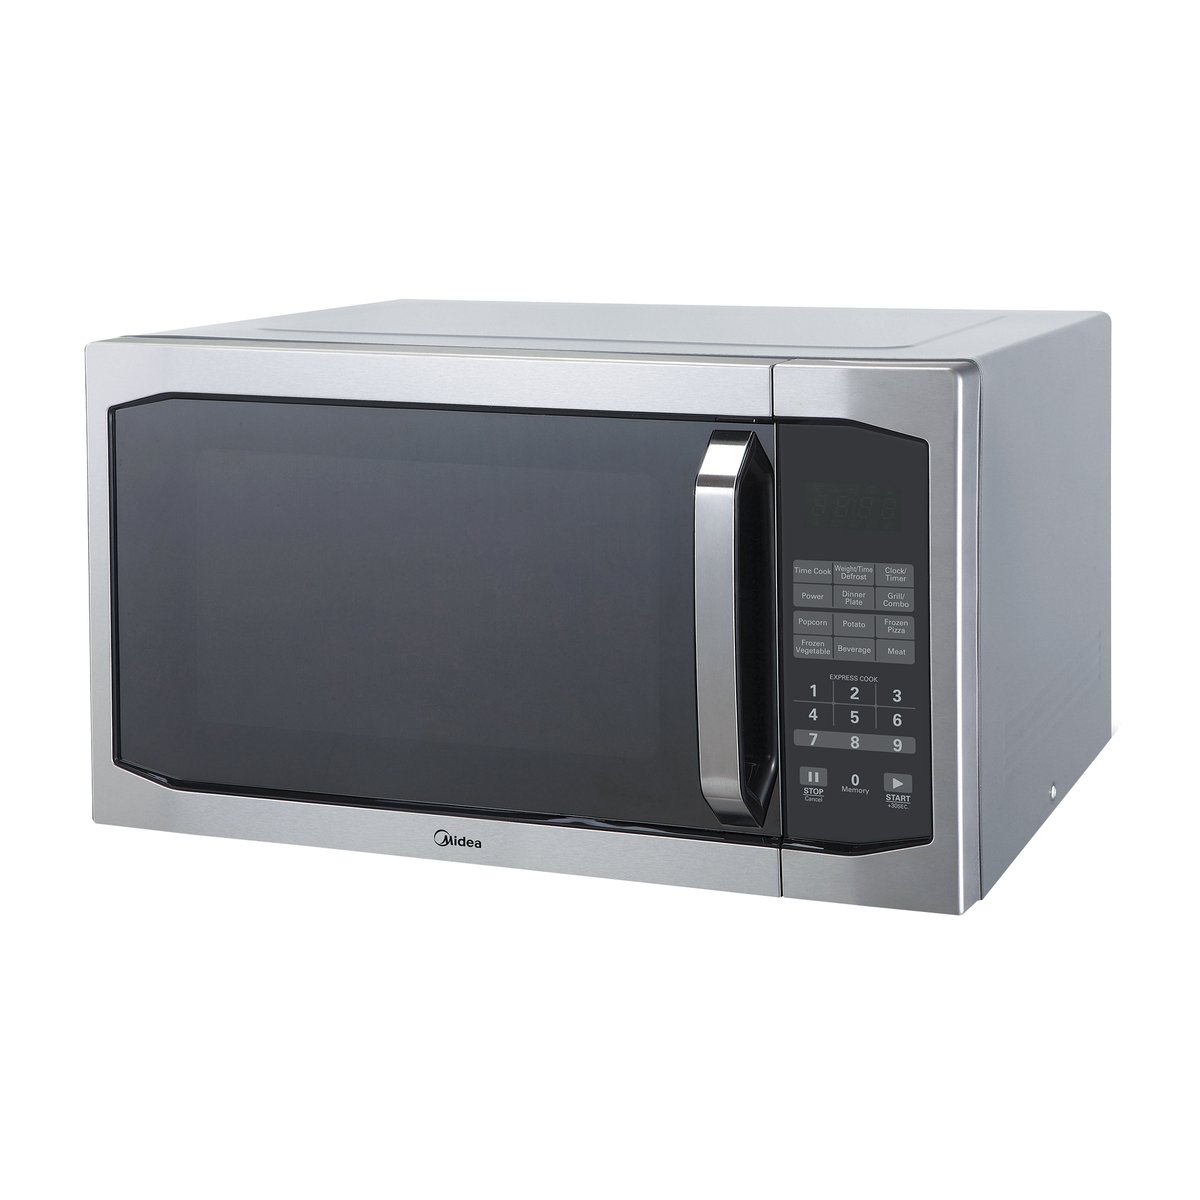 Midea Microwave Oven EG142A5L 42Ltr